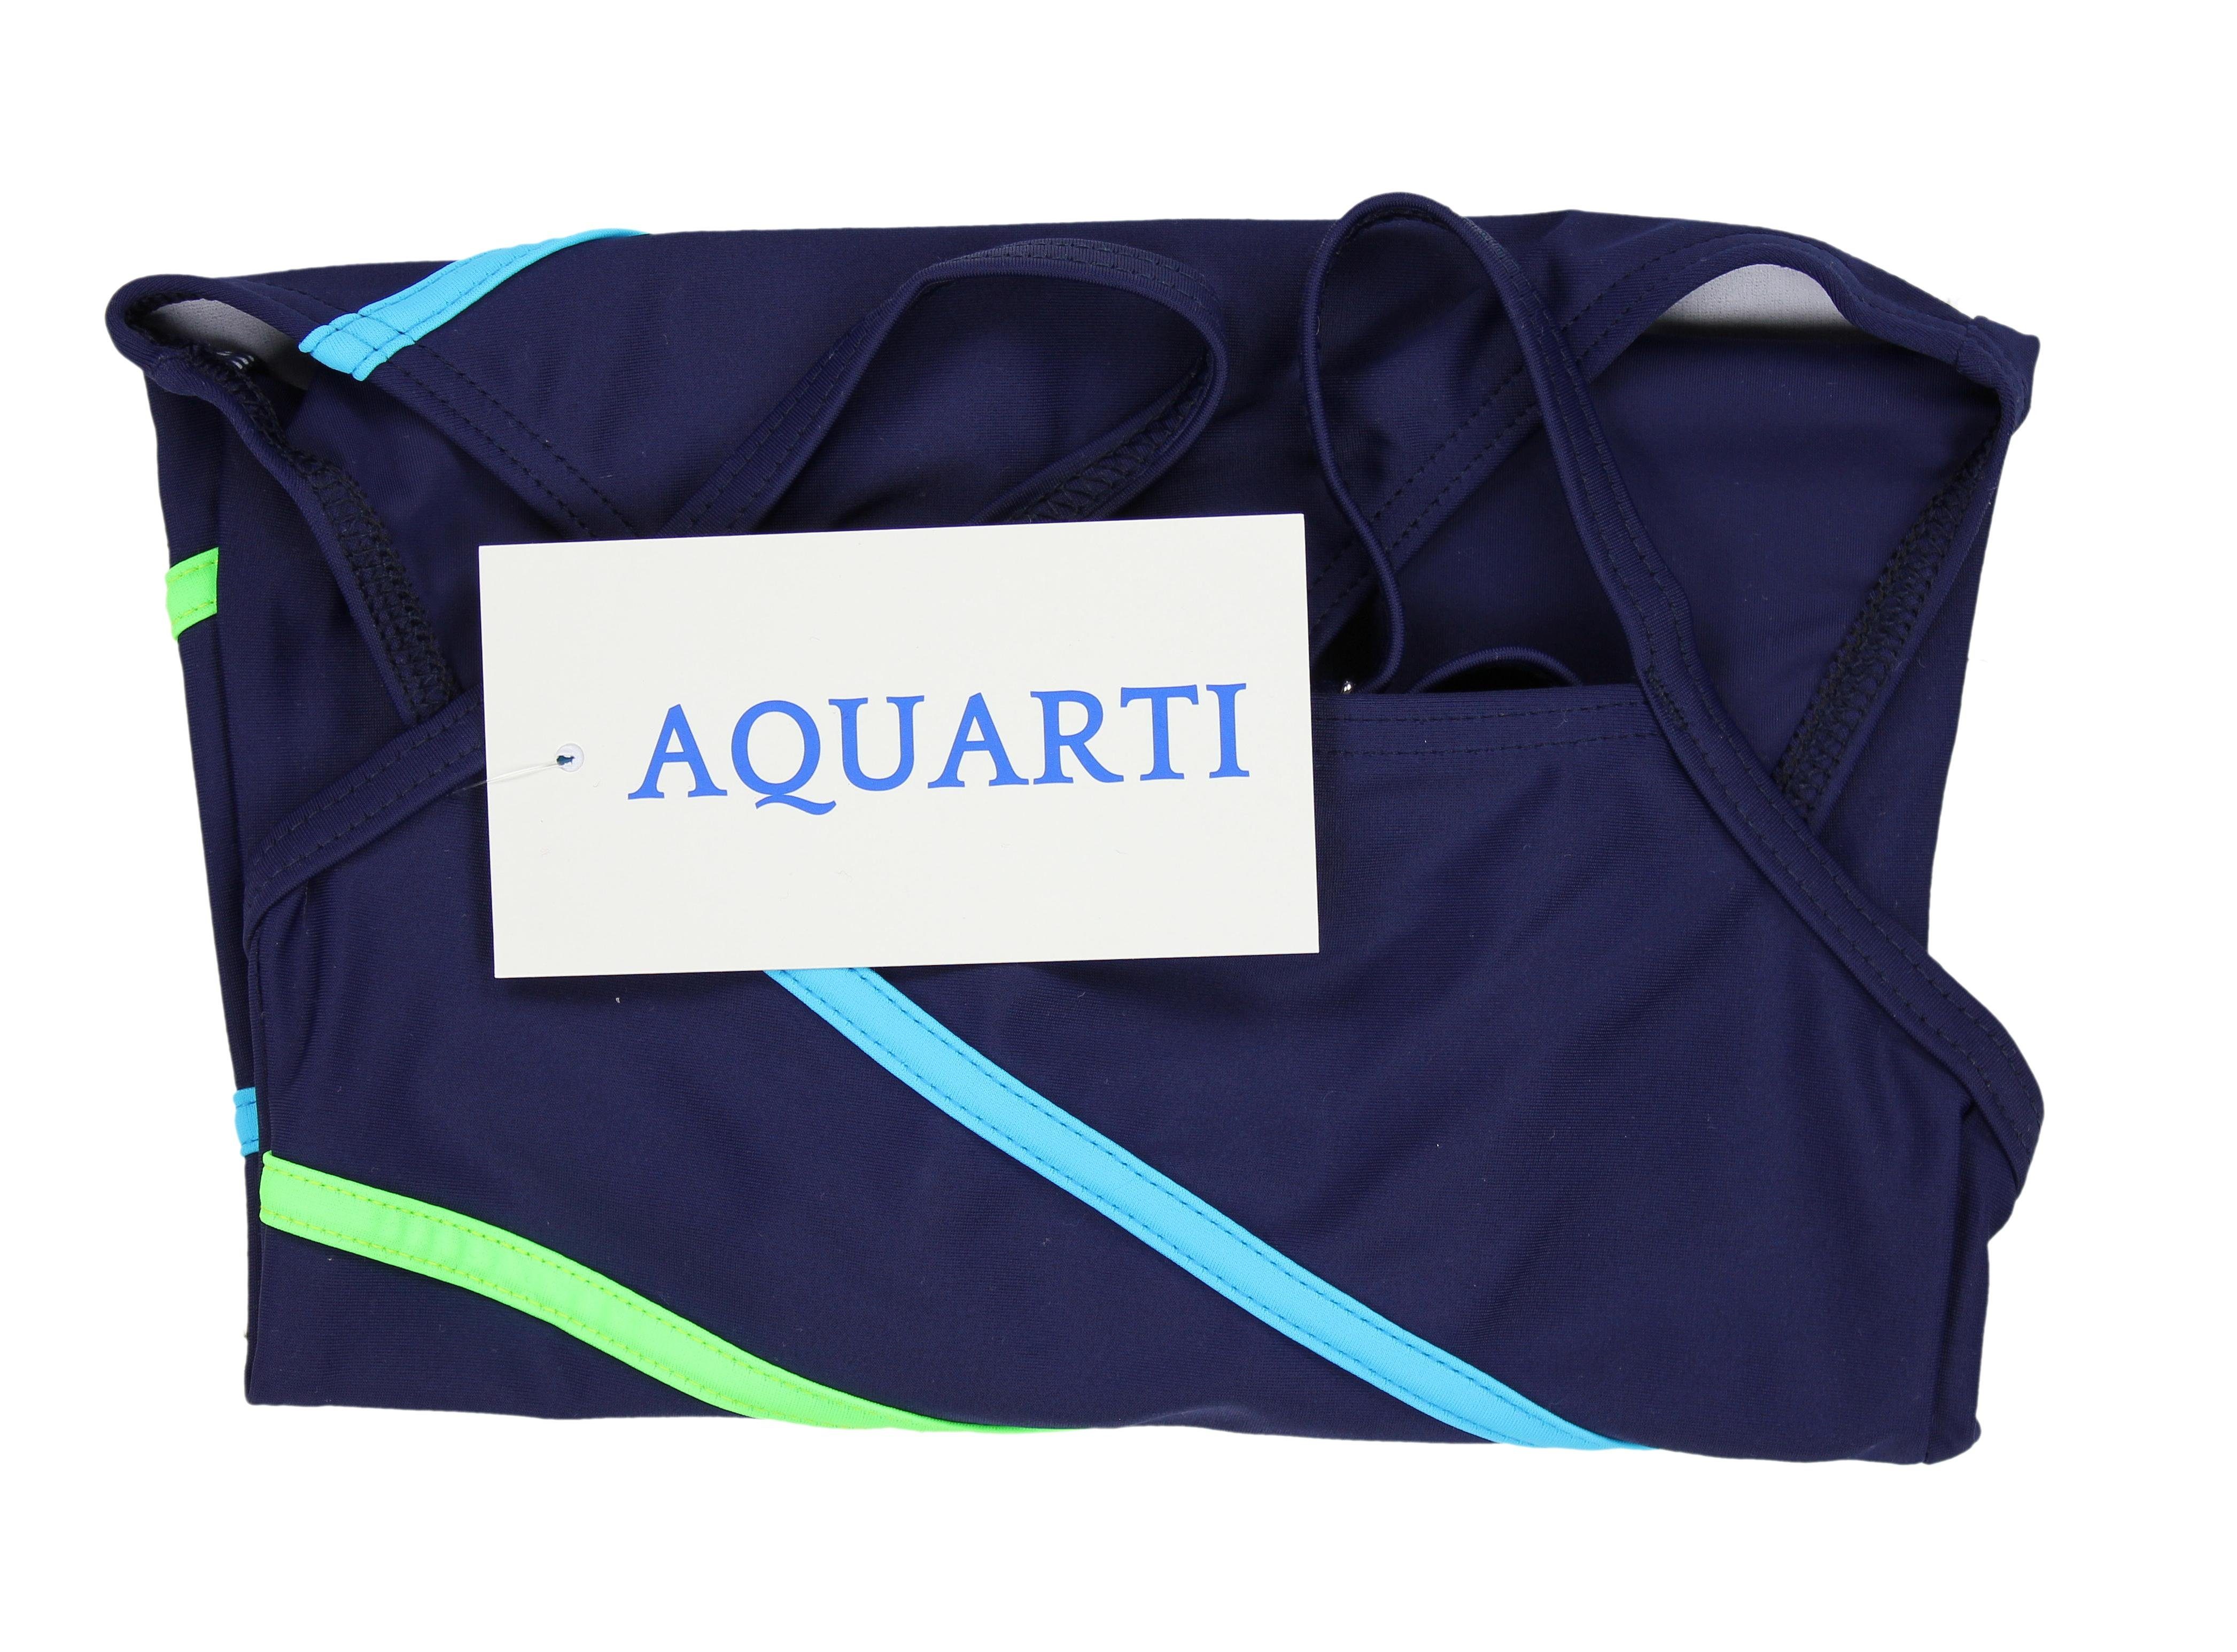 / Aquarti Aquarti Hellblau Dunkelblau Spaghettiträgern Streifen Badeanzug Neongrün Mädchen mit Streifen Badeanzug